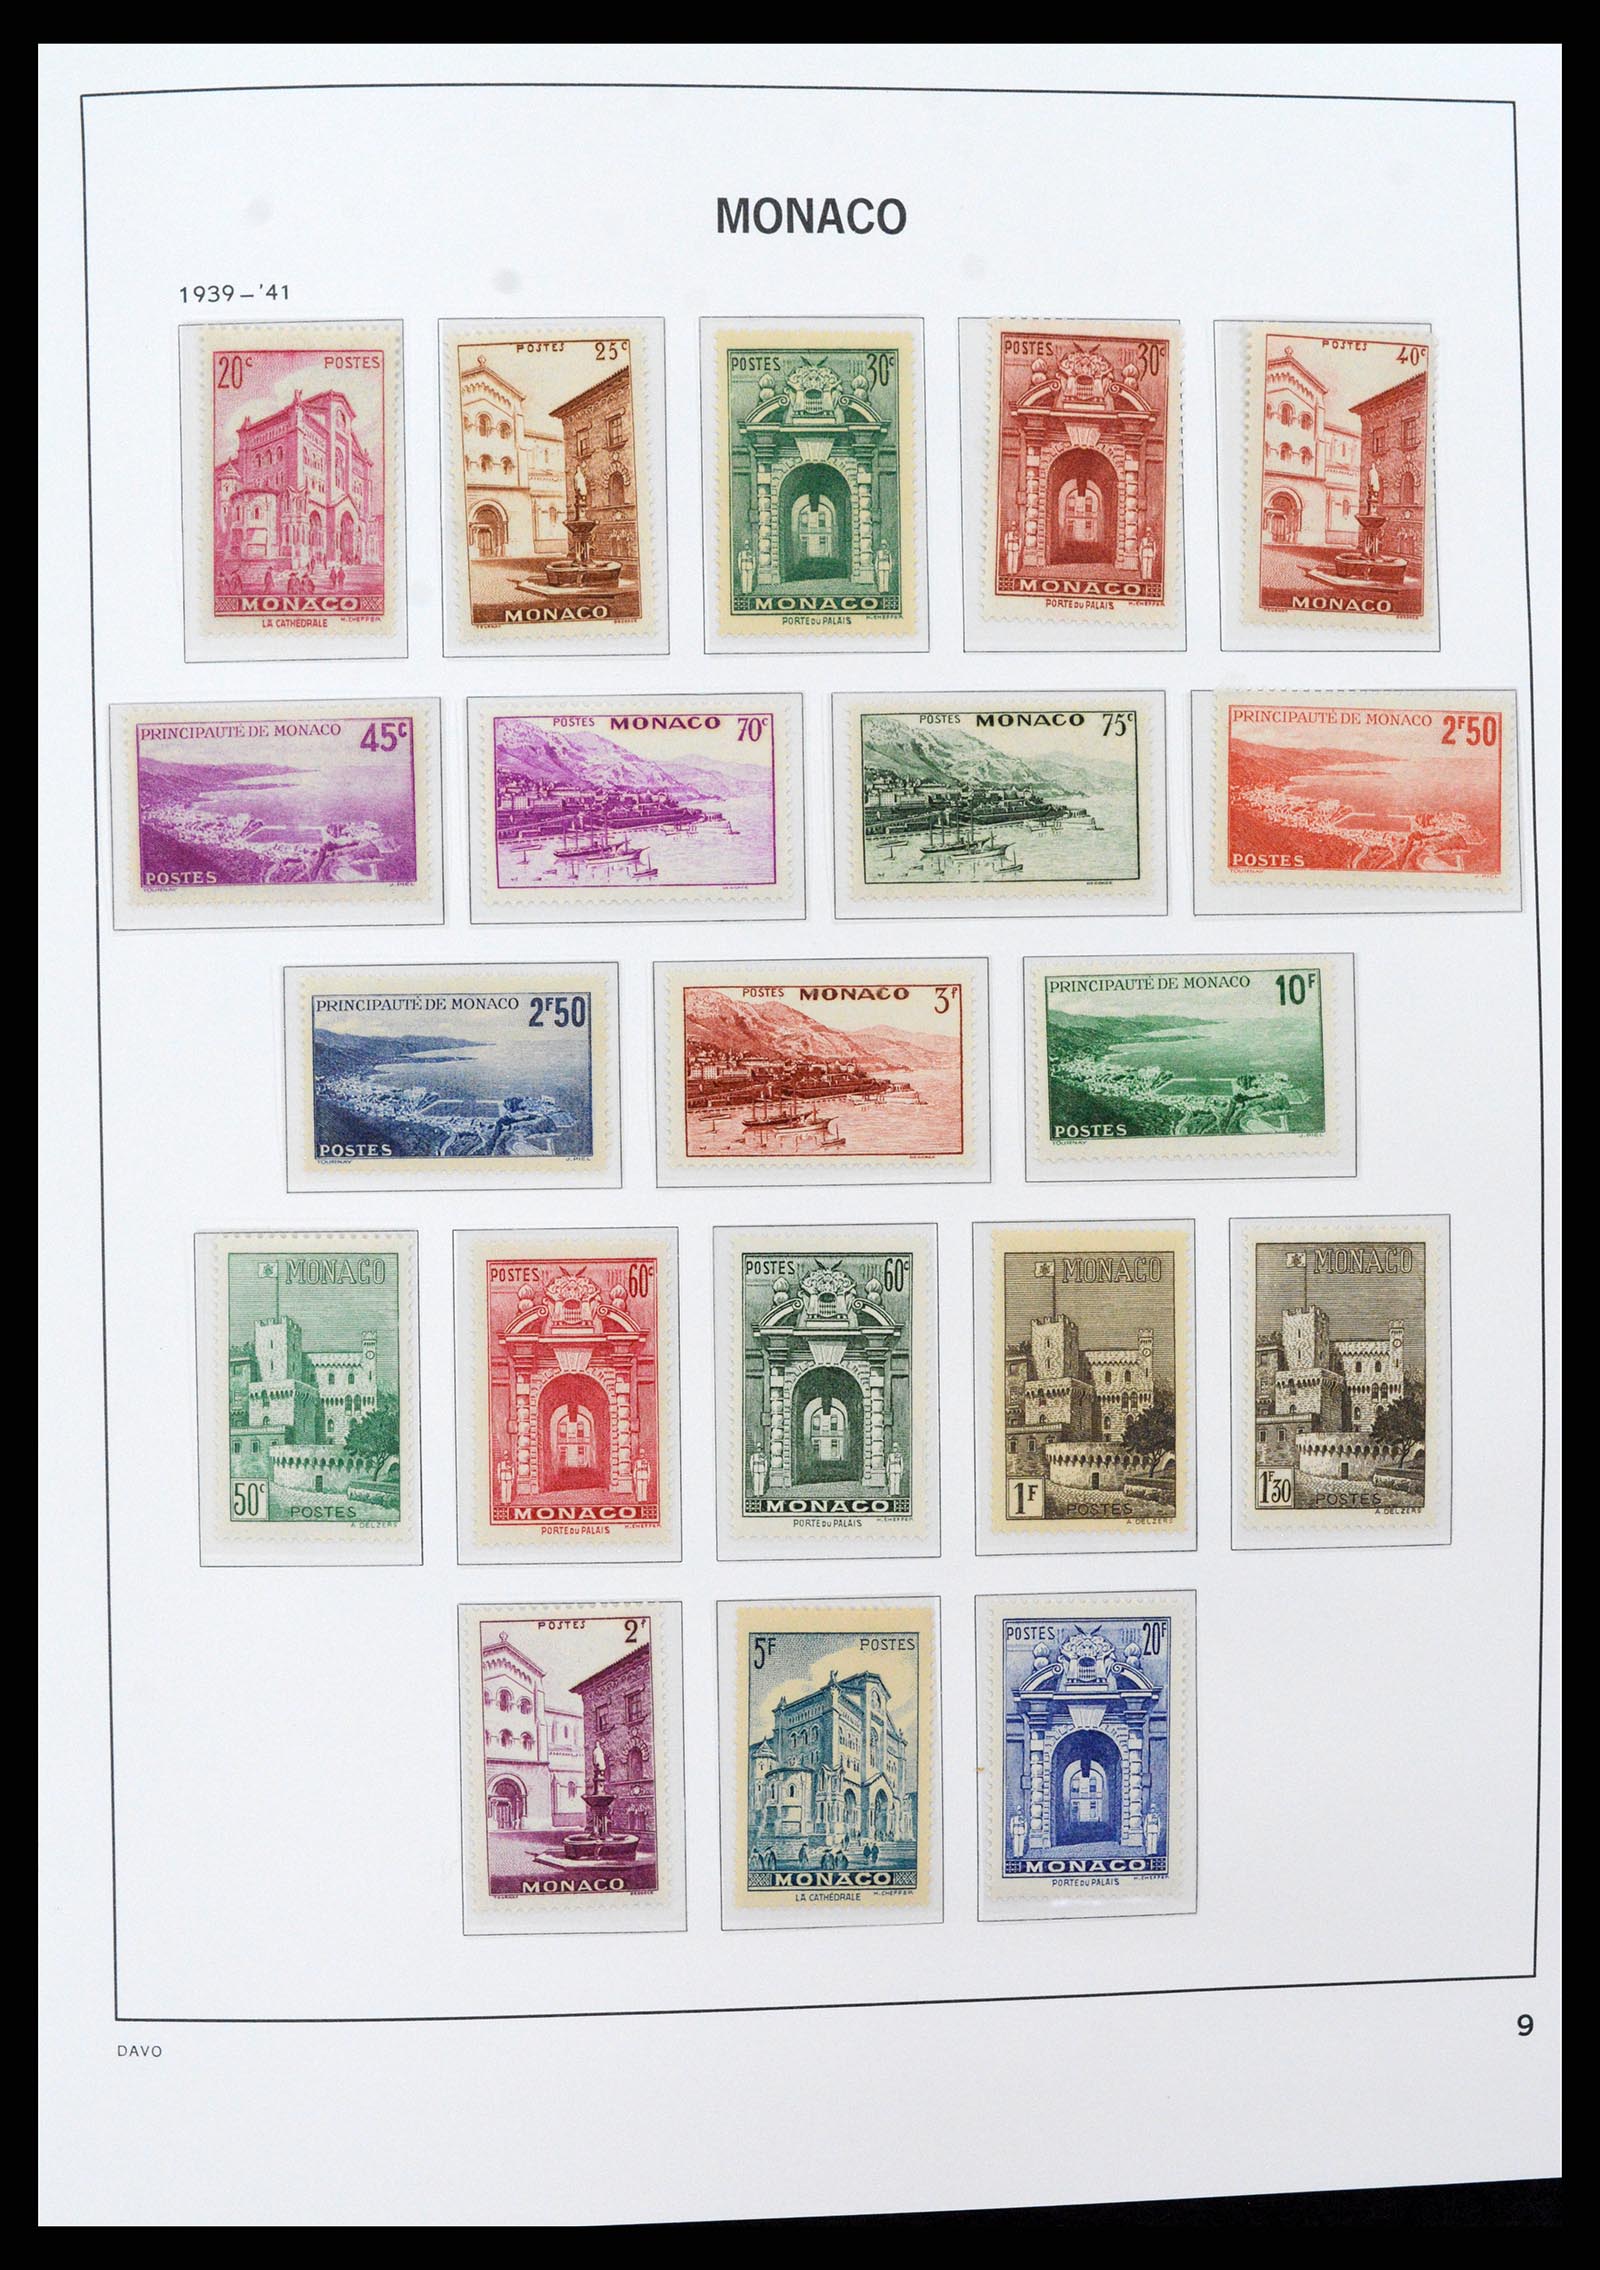 37279 009 - Stamp collection 37279 Monaco 1885-1969.